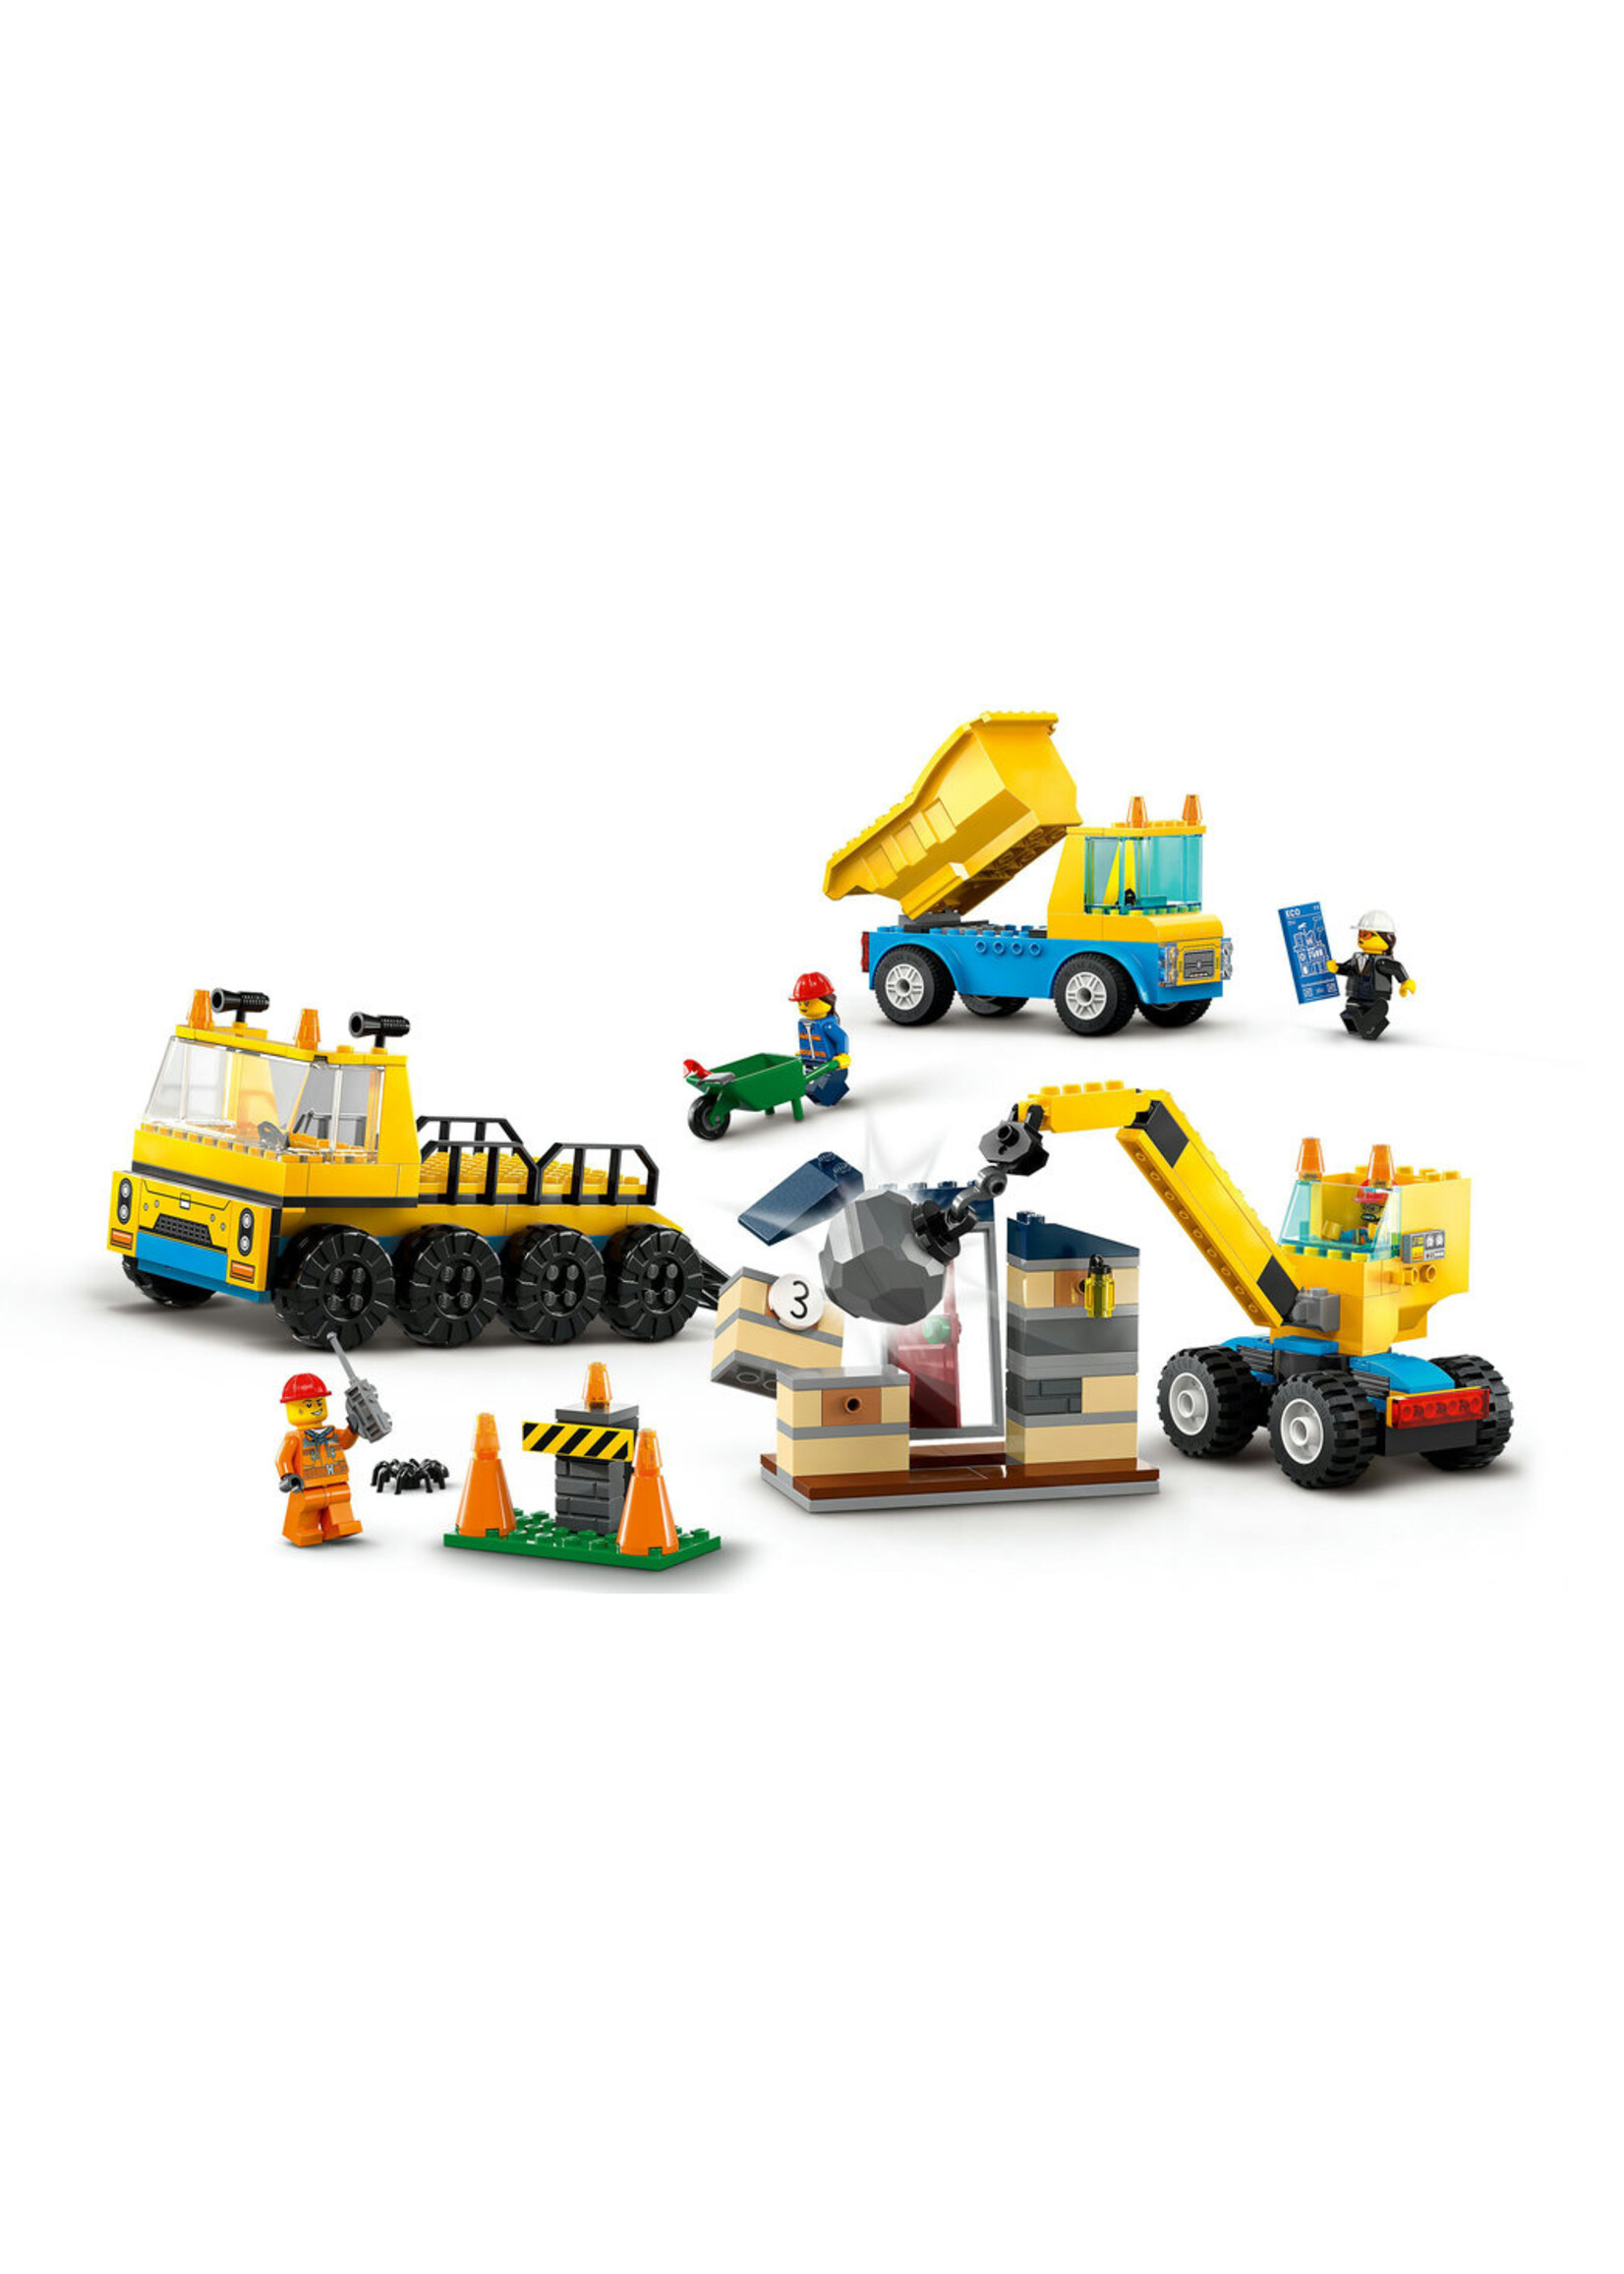 LEGO 60391 - Construction Trucks and Wrecking Ball Crane